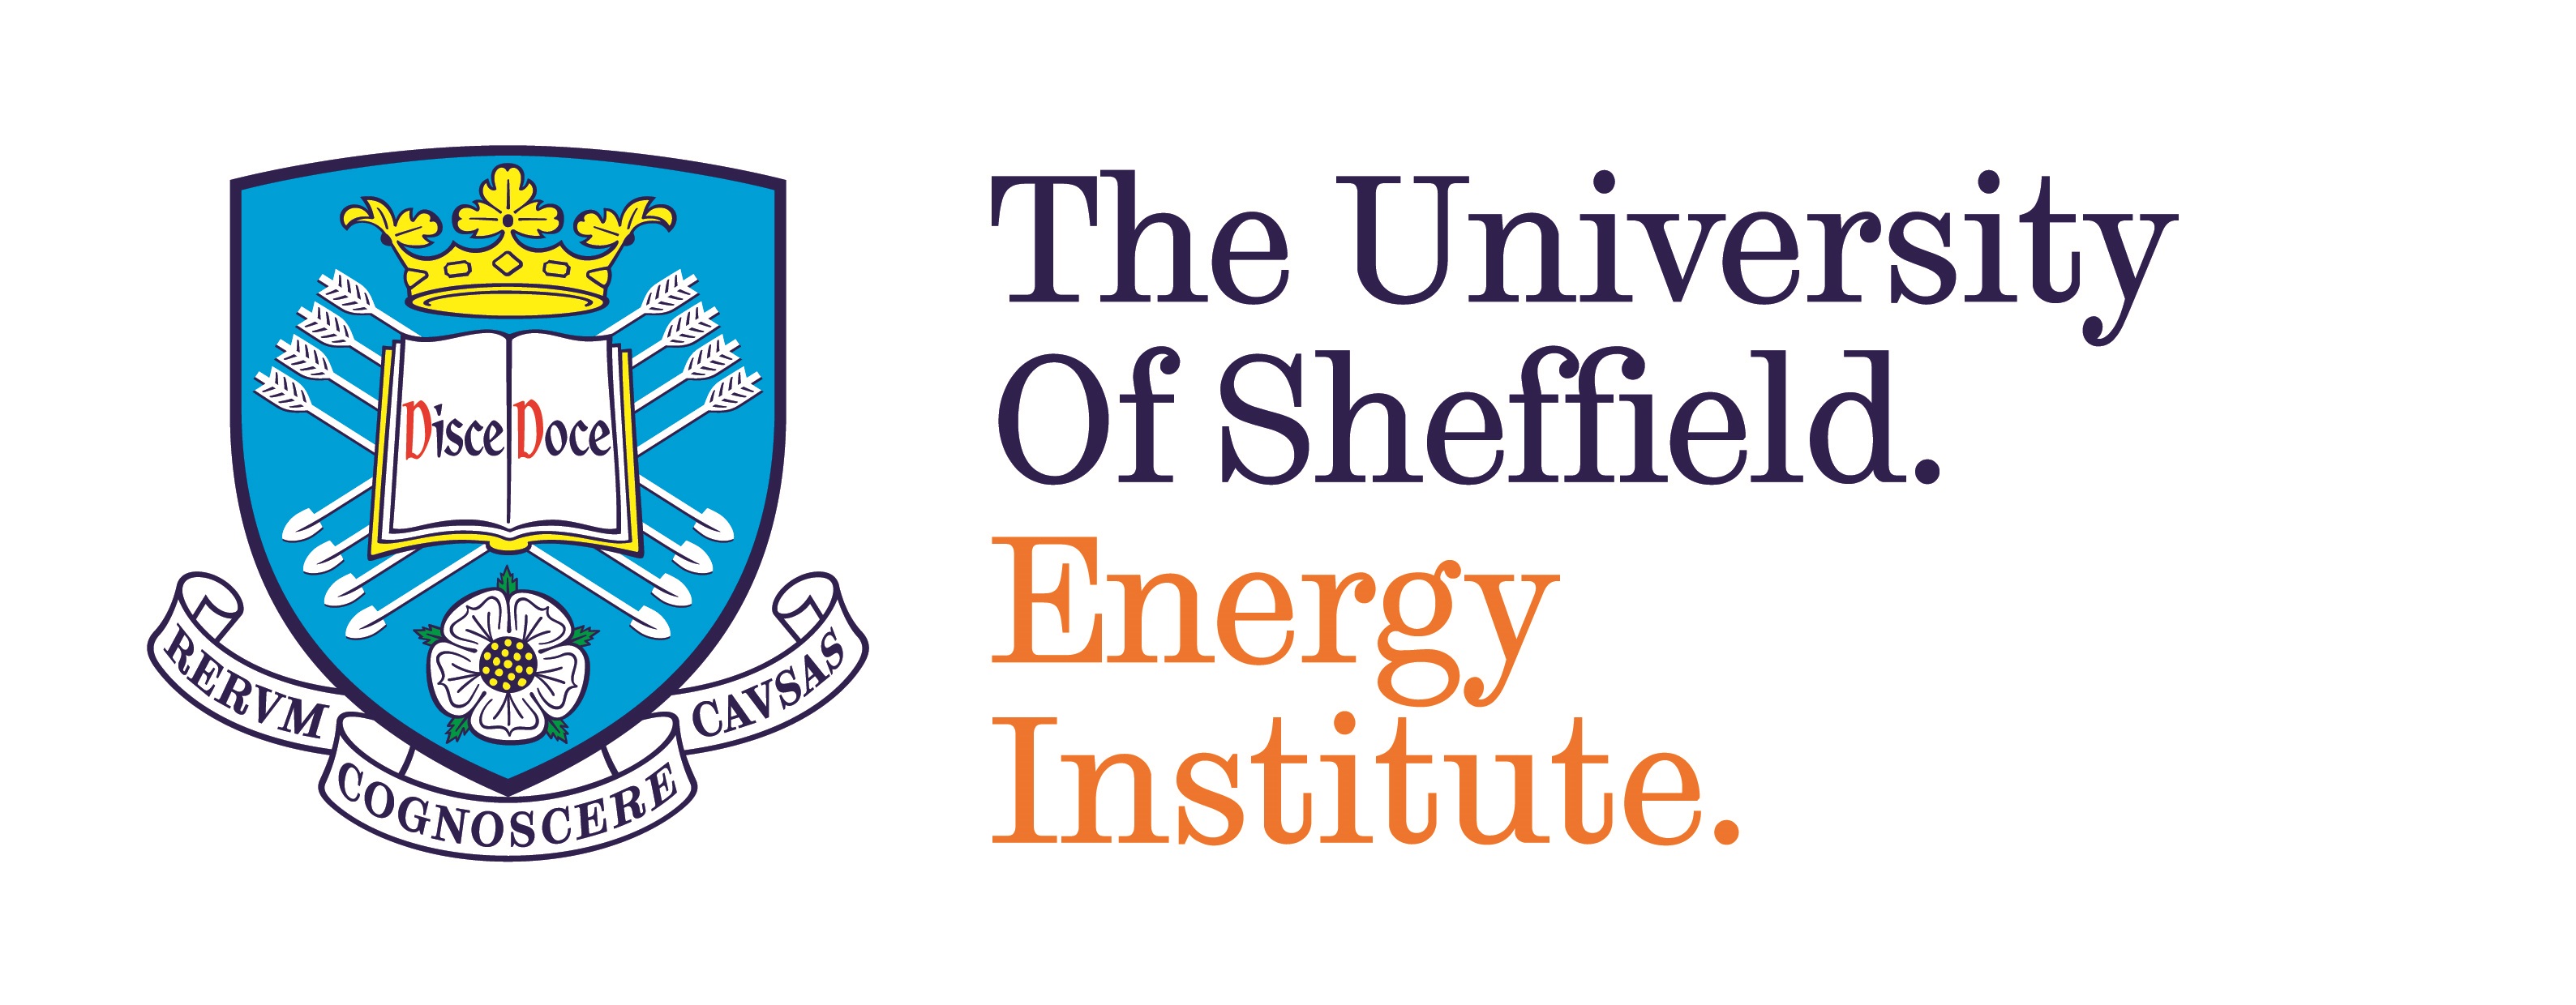 The University of Sheffield, Energy Institute - logo